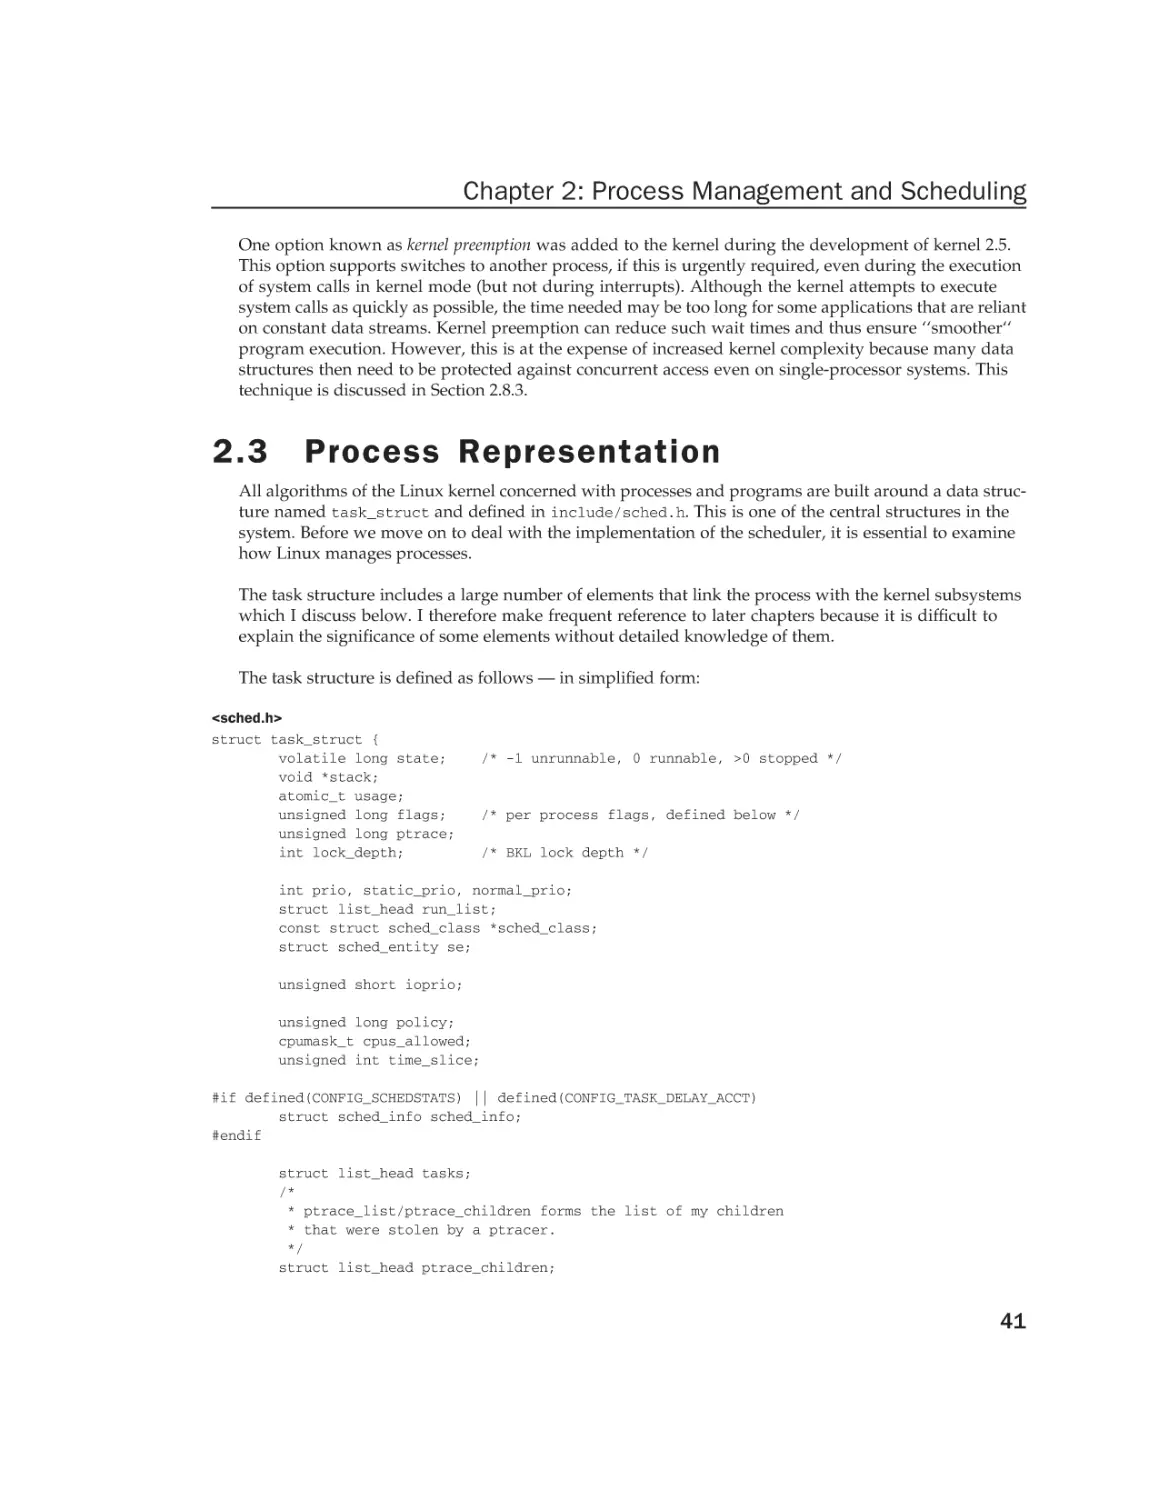 2.3 Process Representation